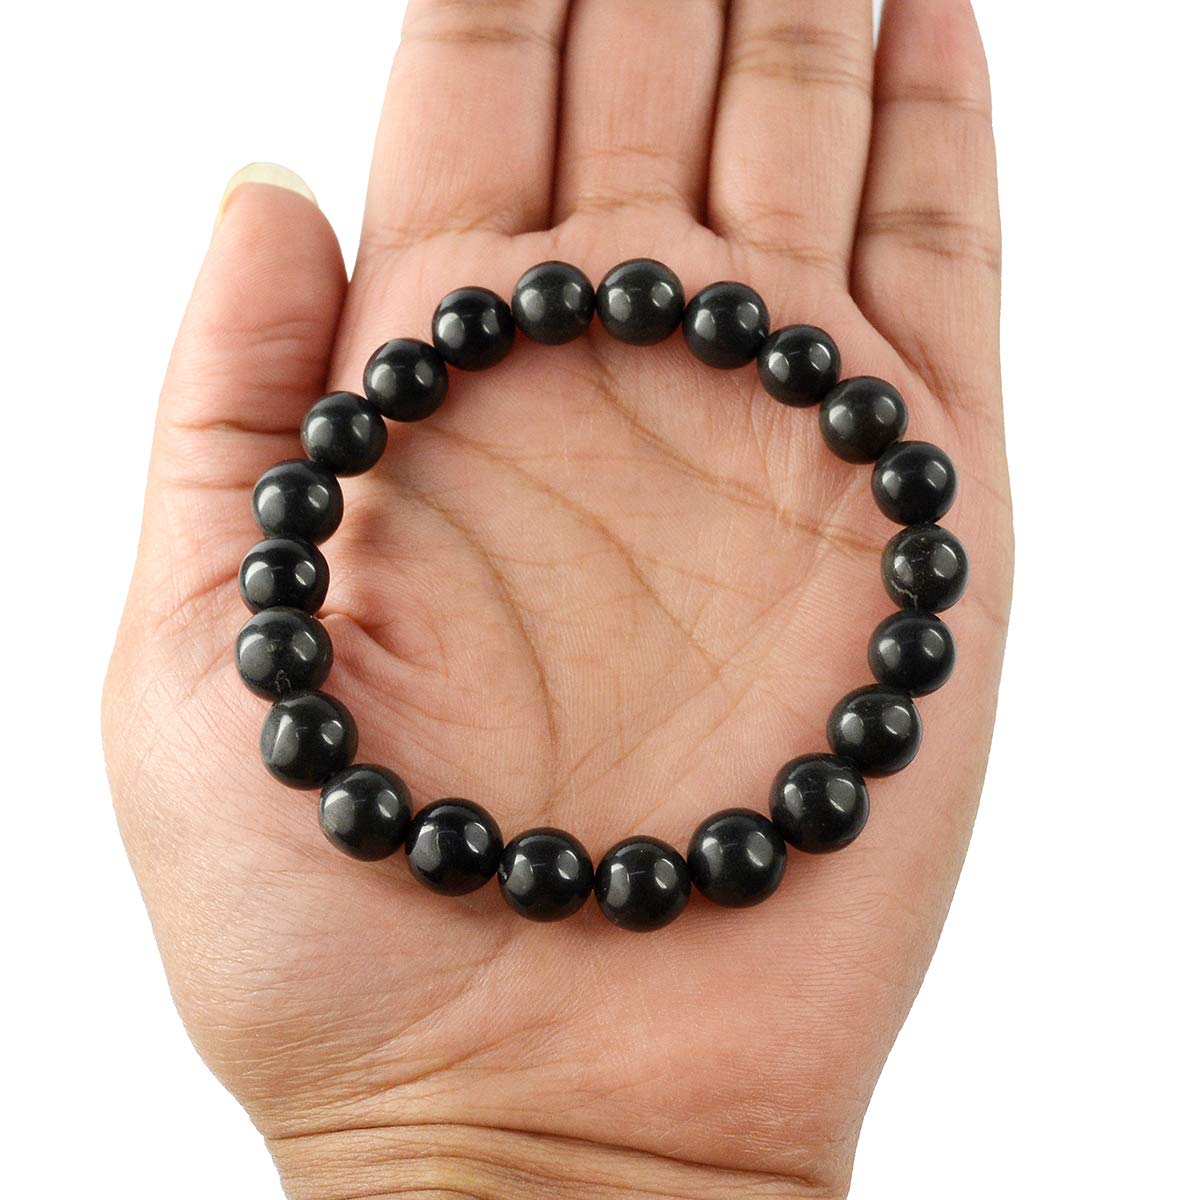 Black Agate Natural Healing Crystal Bracelet - 8mm Round Beads - Beaded Bracelet